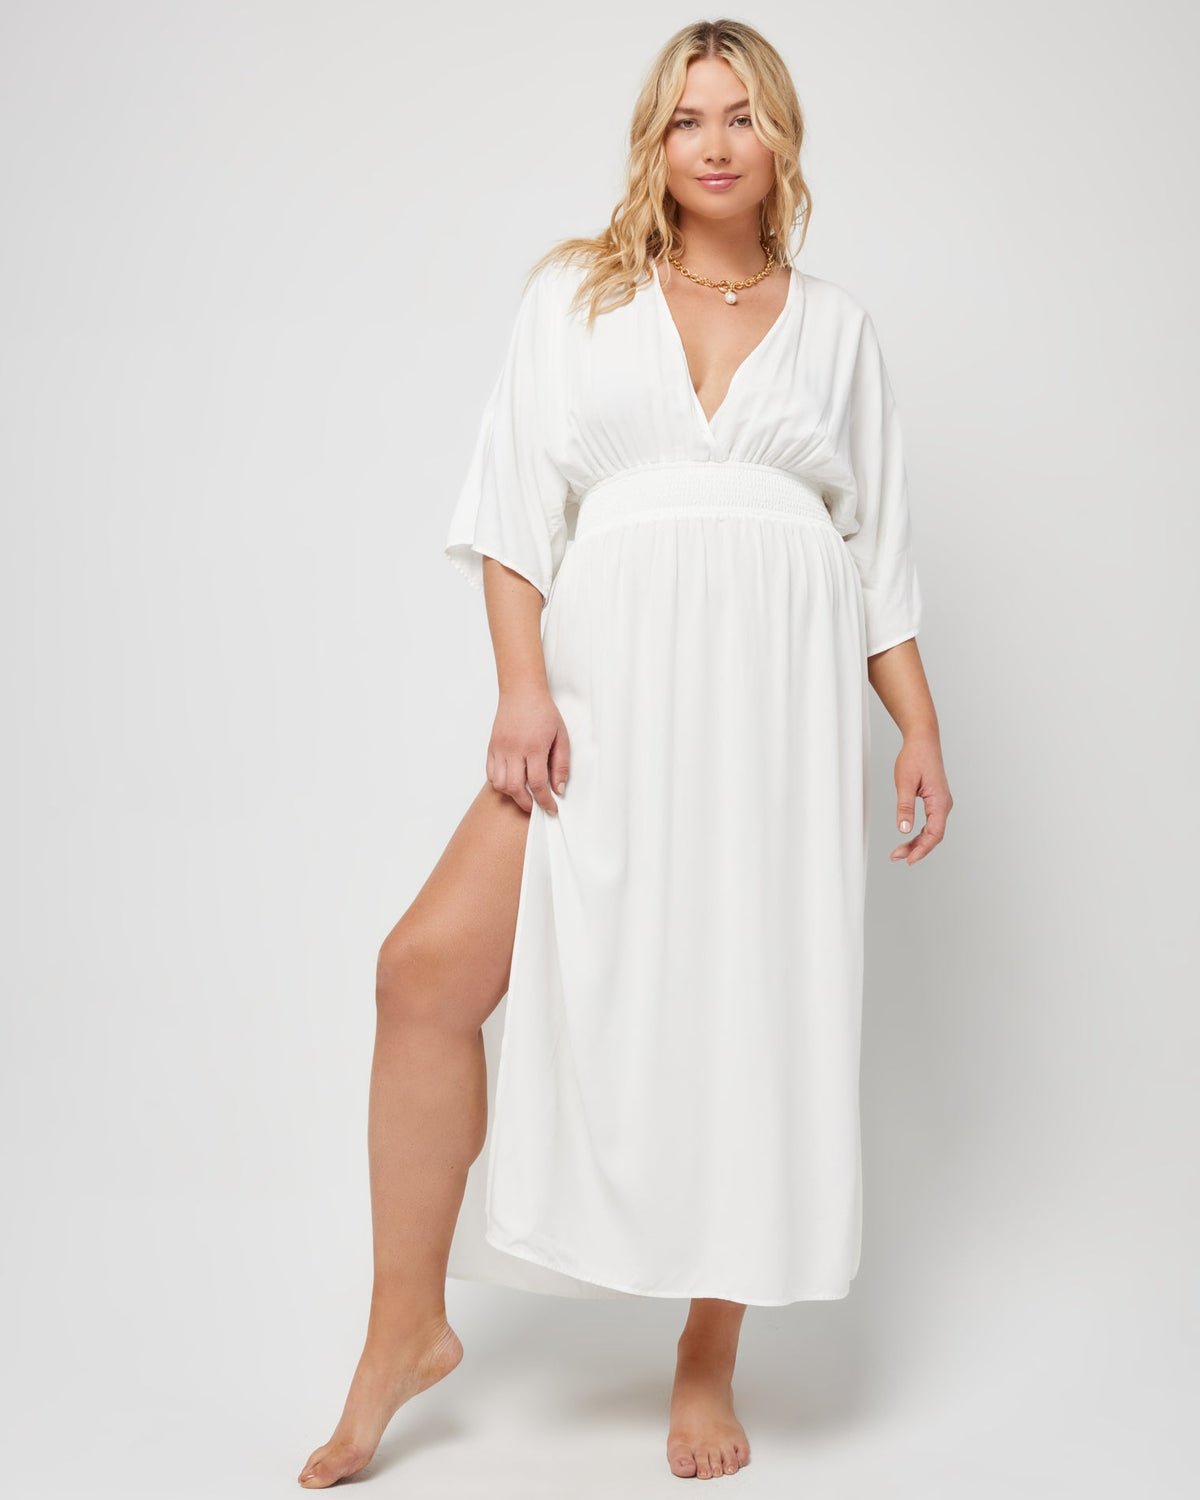 Sungazer Dress Cream | Model: Sydney (size: XL)